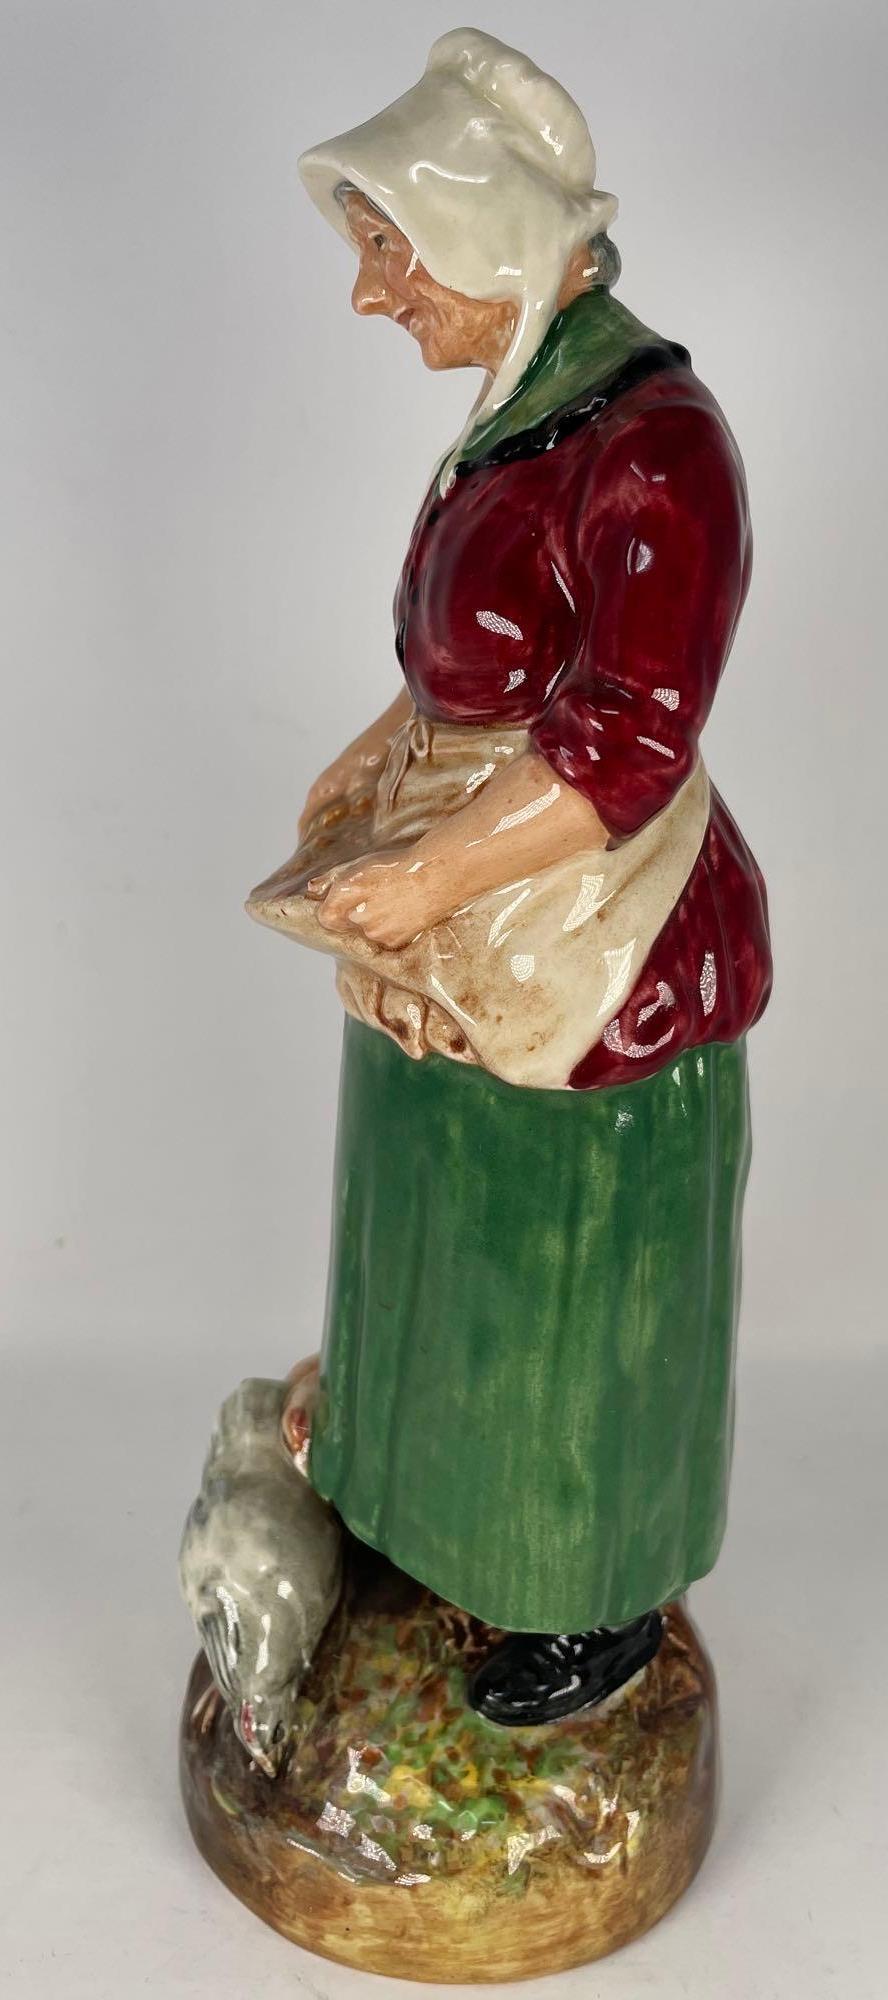 Royal Doulton Figure "The Farmer's Wife", HN 2069